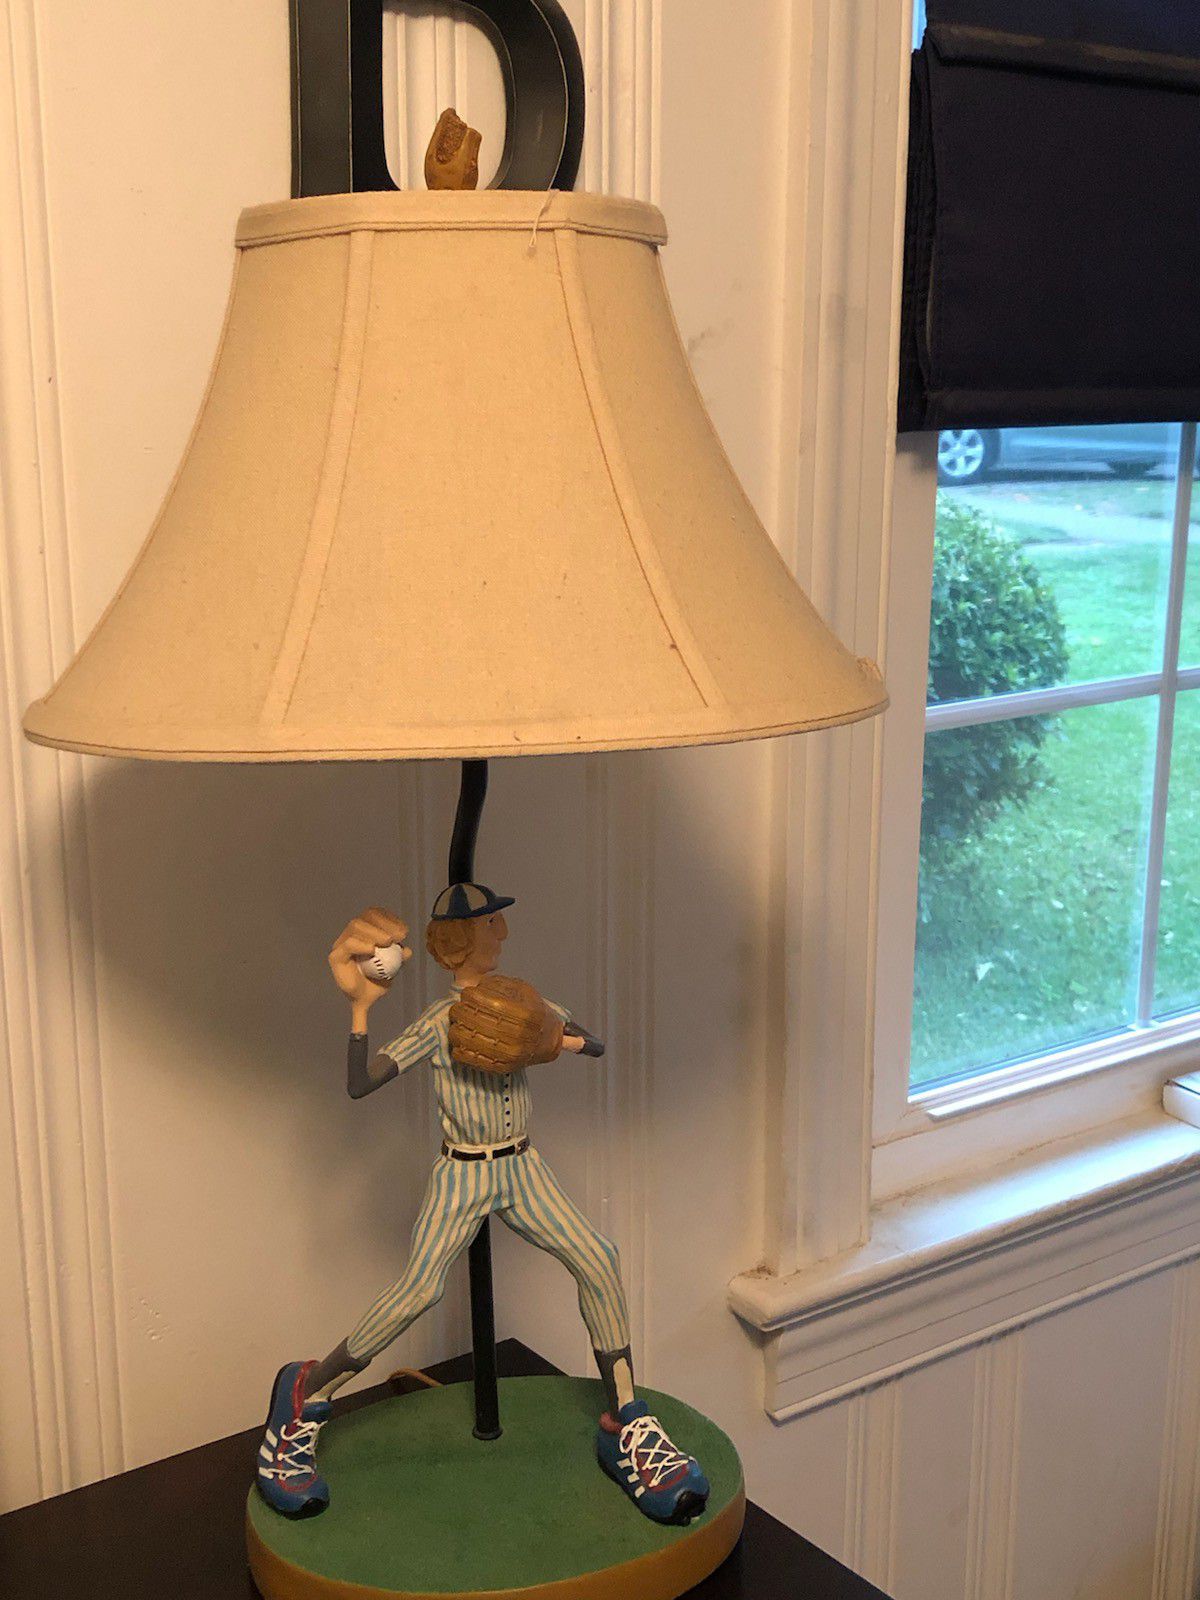 Kid's baseball lamp